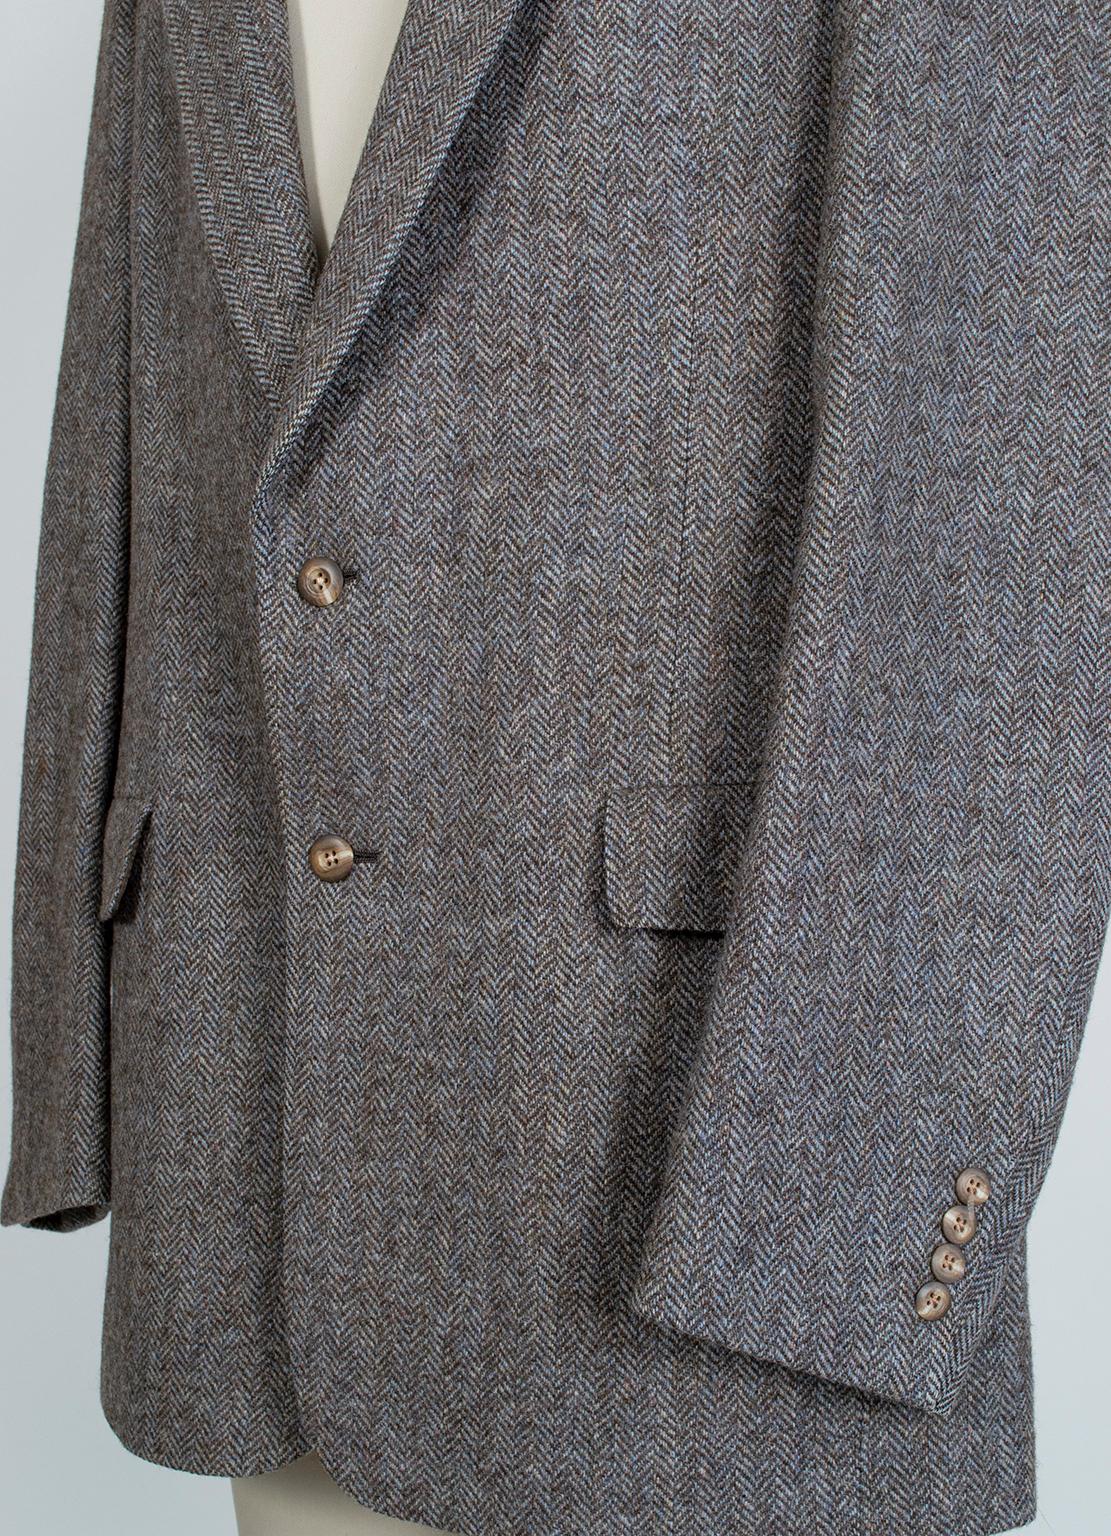 Men’s Christian Dior 2-Button Gray-Blue Herringbone Sport Jacket- 42-44 L, 1970s 1